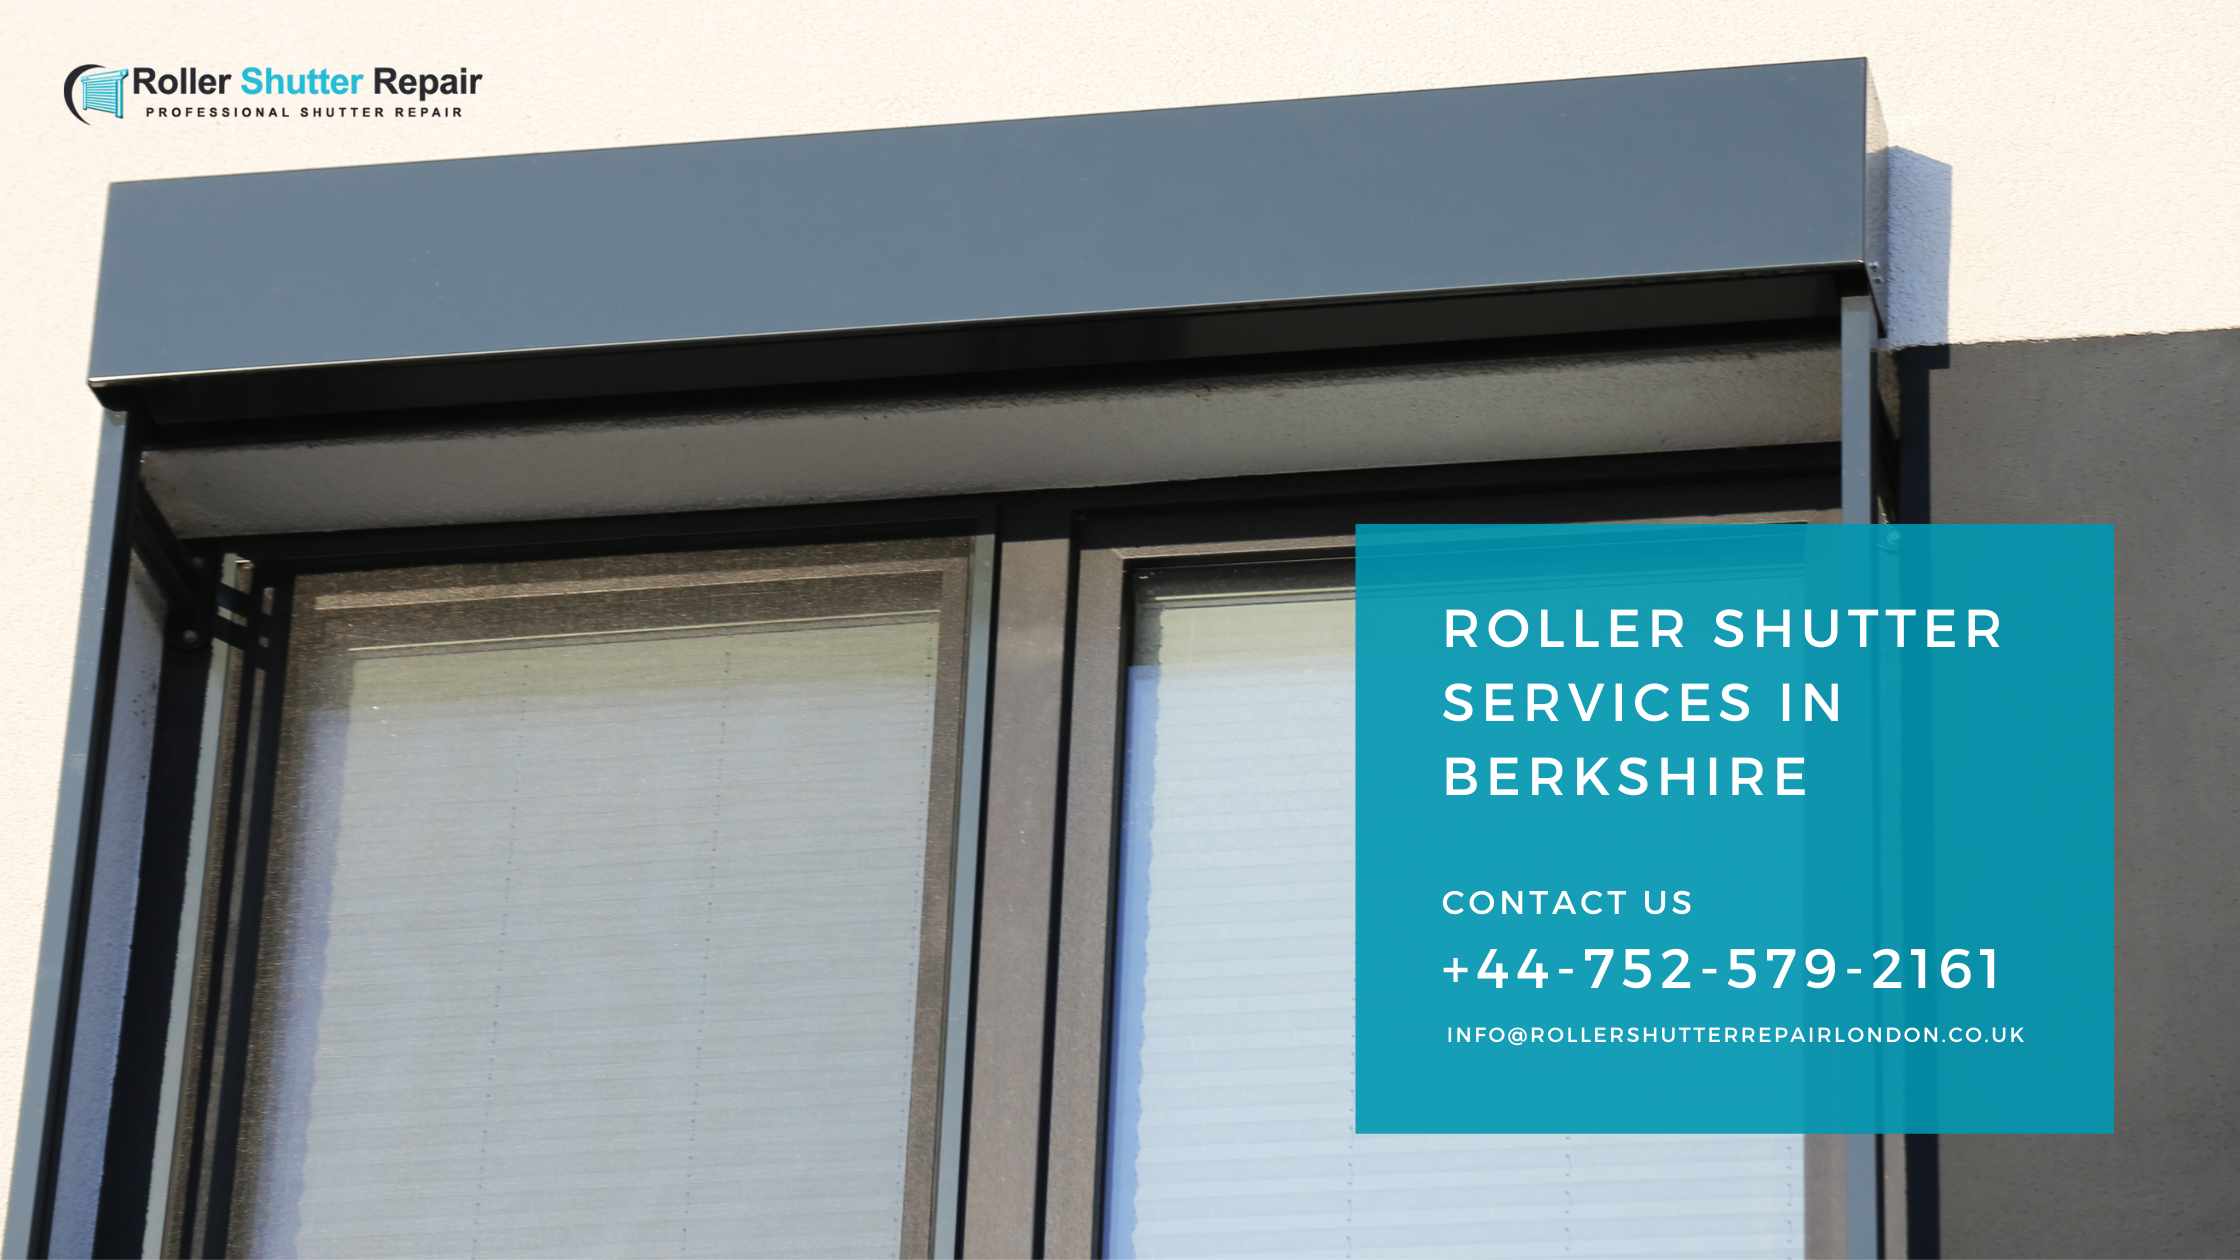 Roller Shutter Services in Berkshire